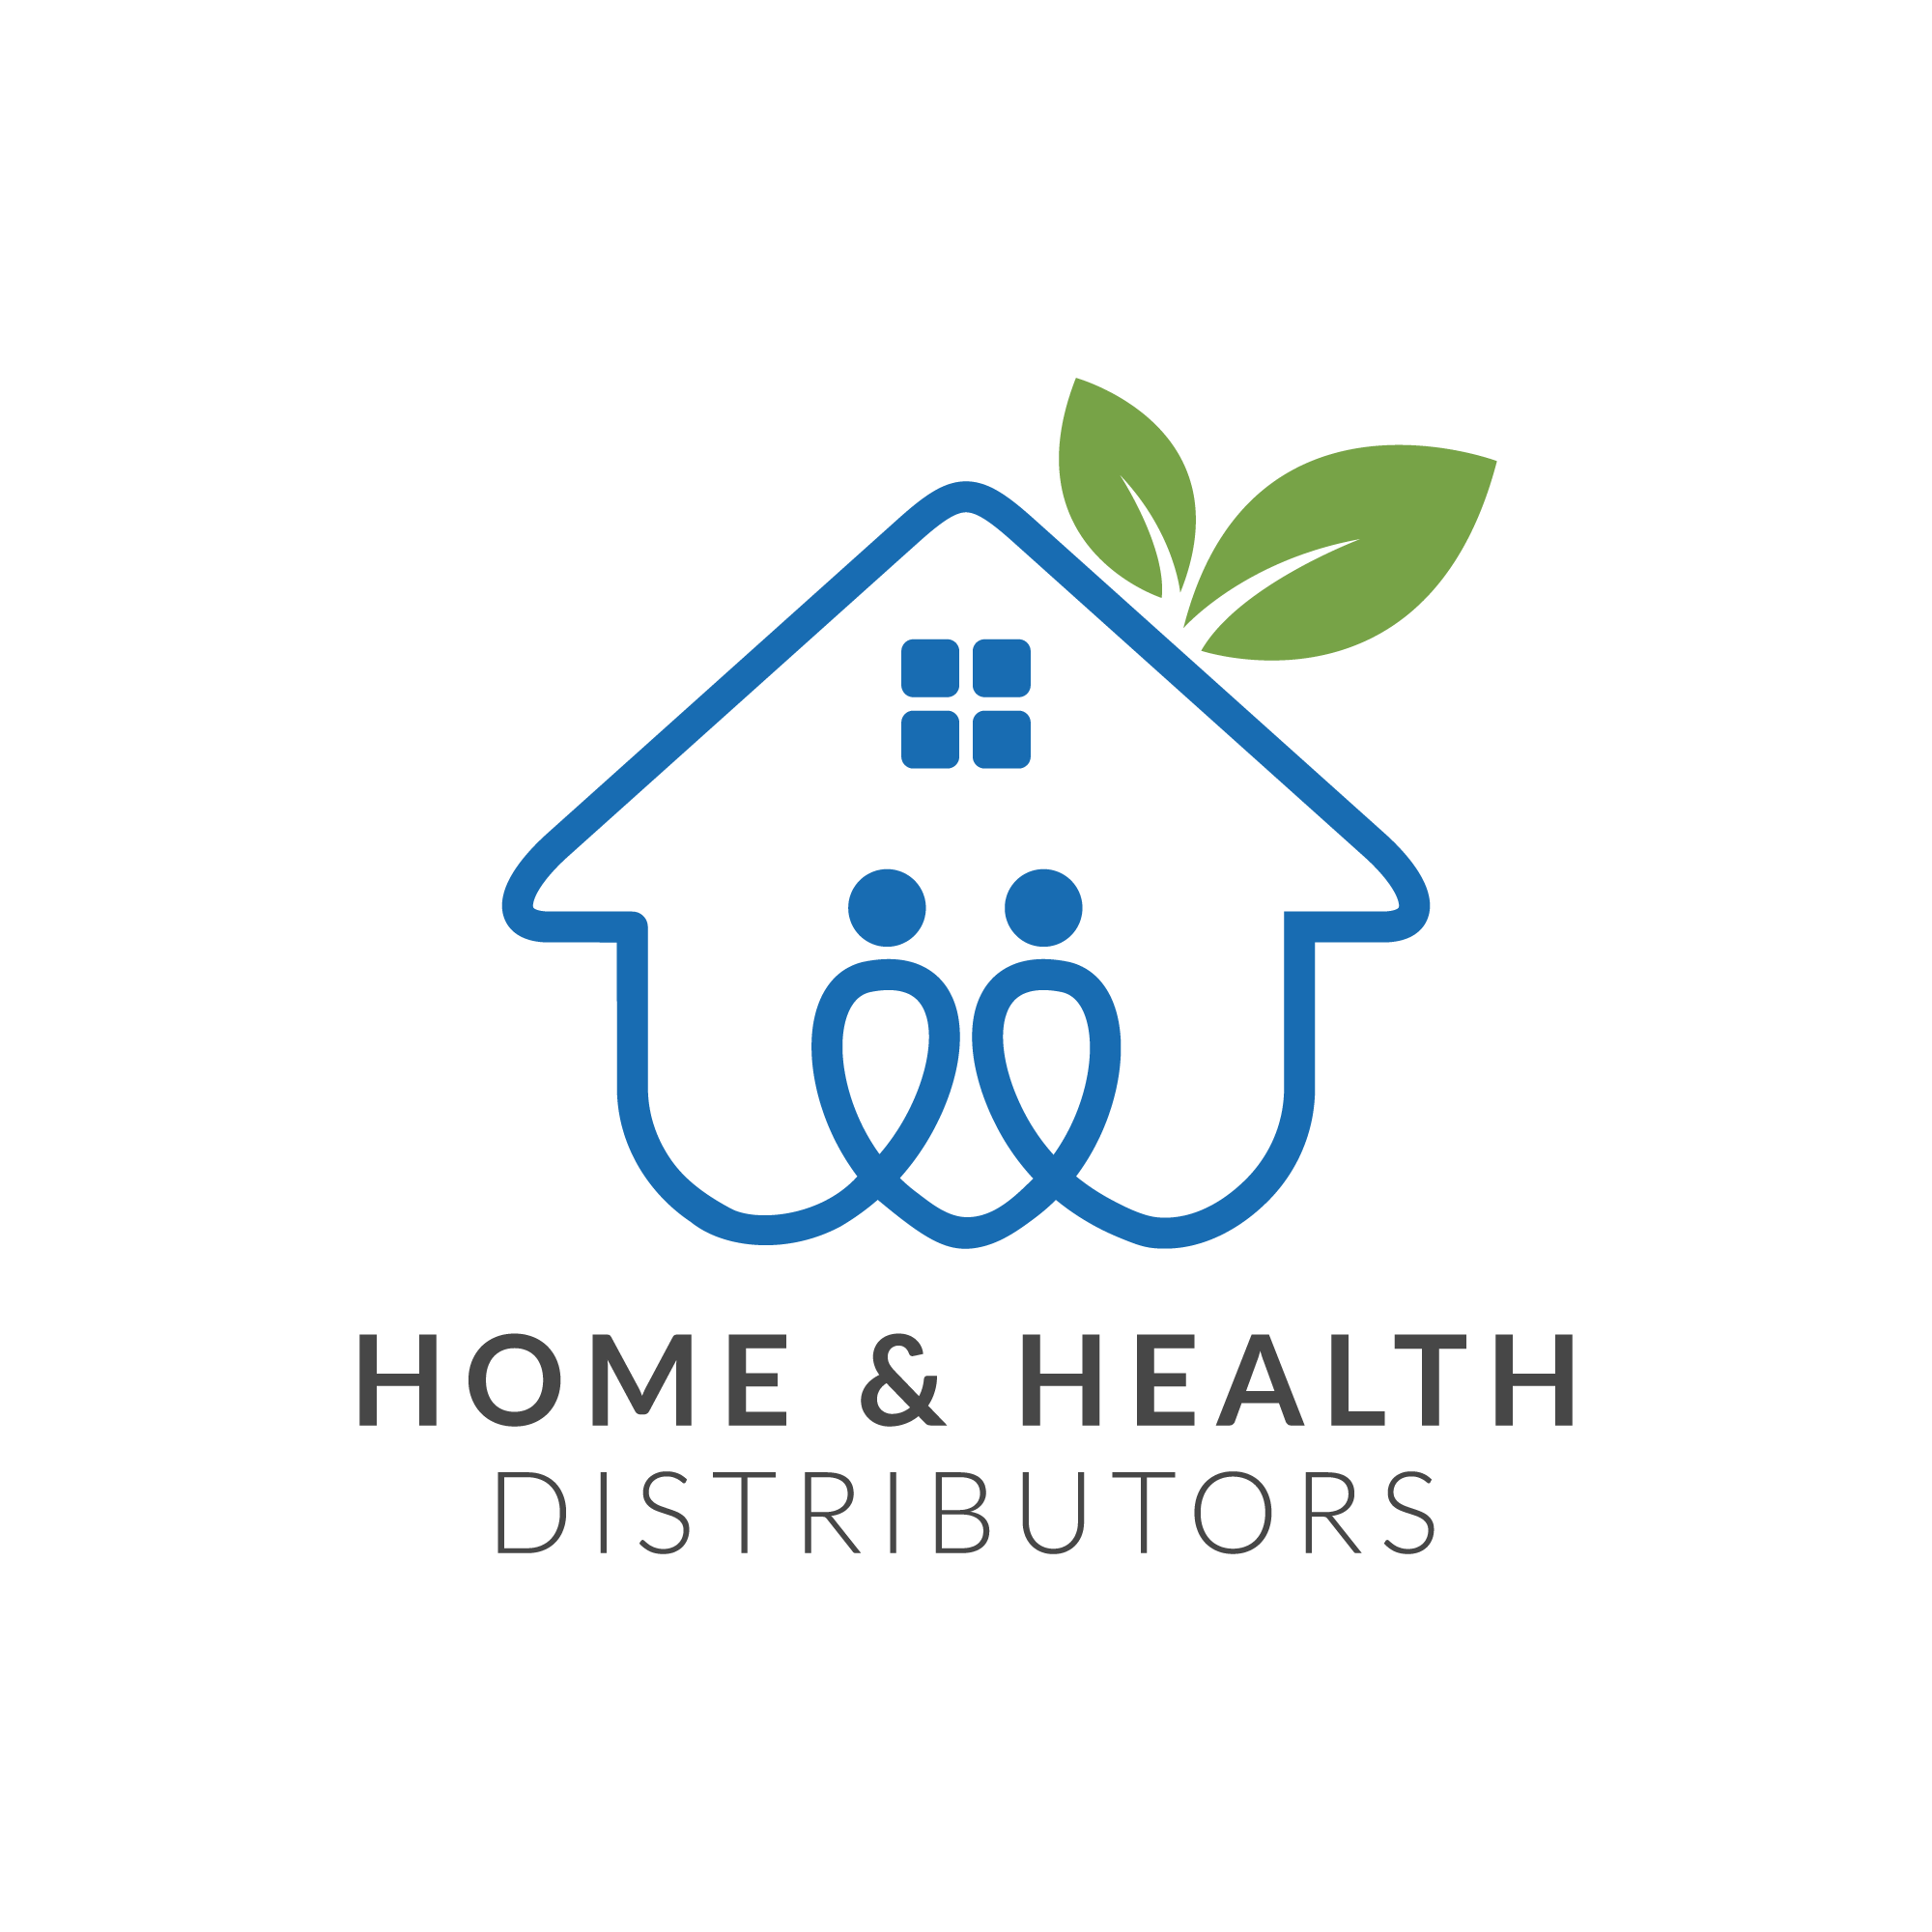 Home & Health Distributors